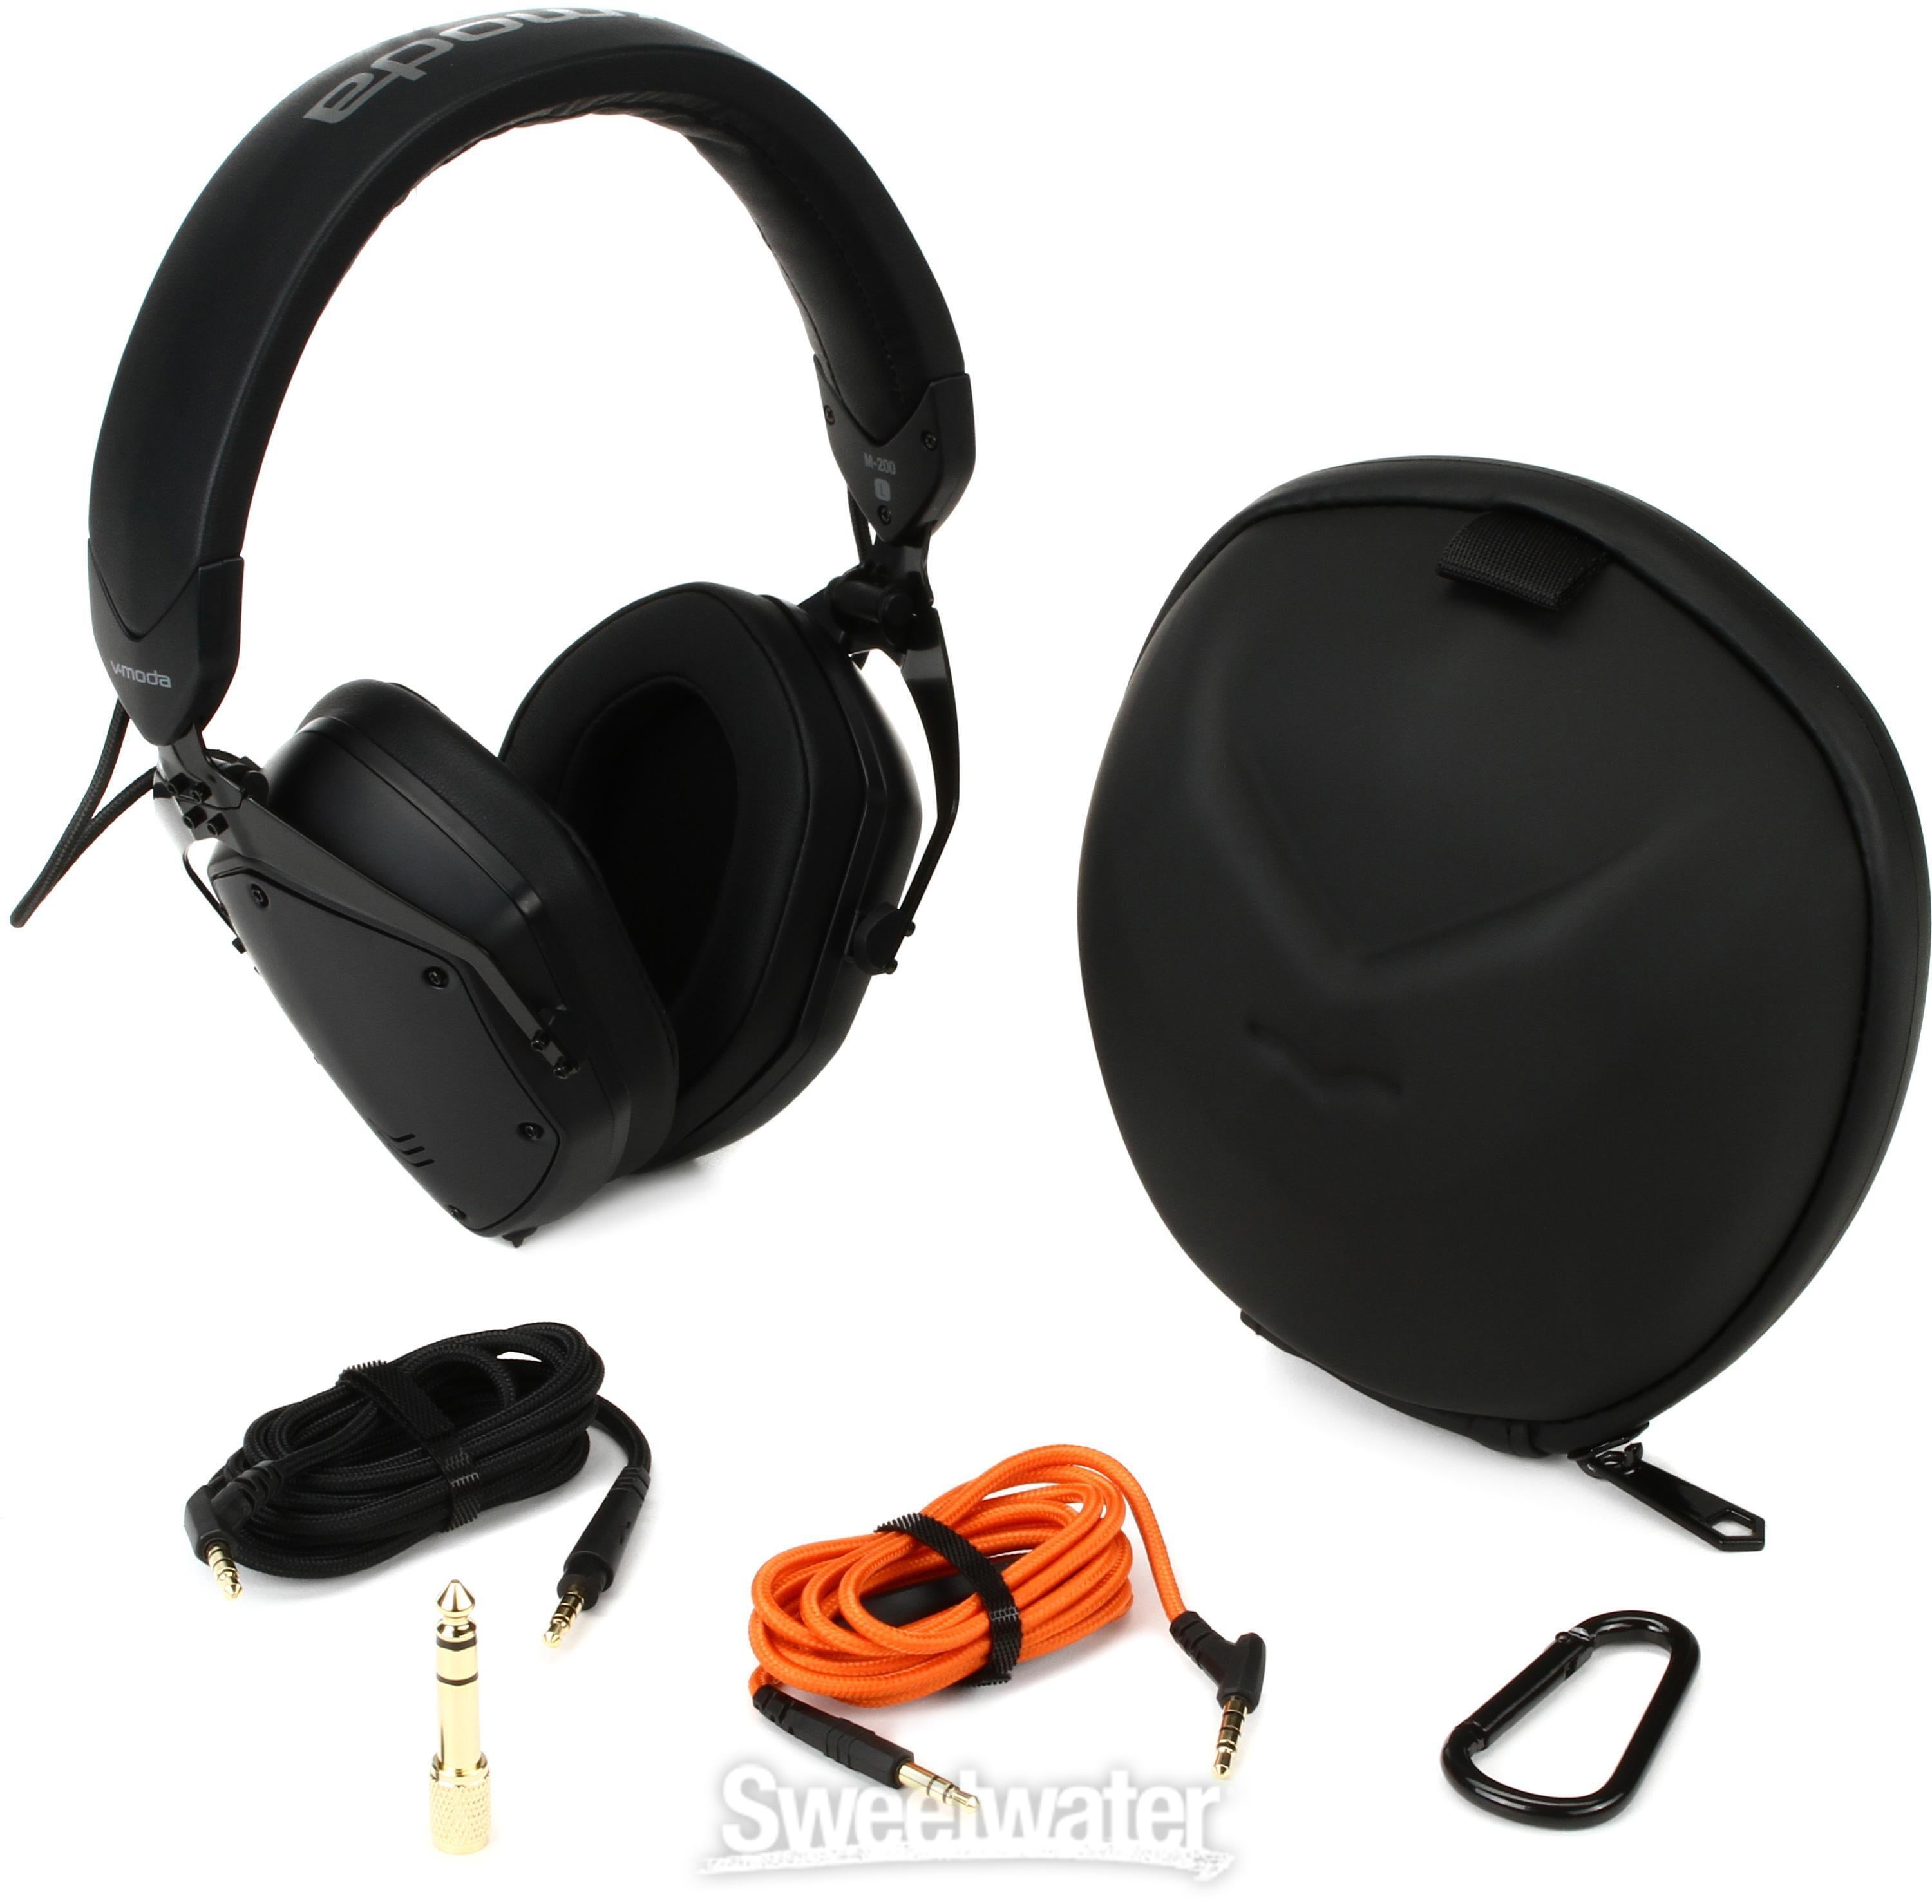 V-Moda M-200 Hi-Res Audio Studio Headphones - Matte Black